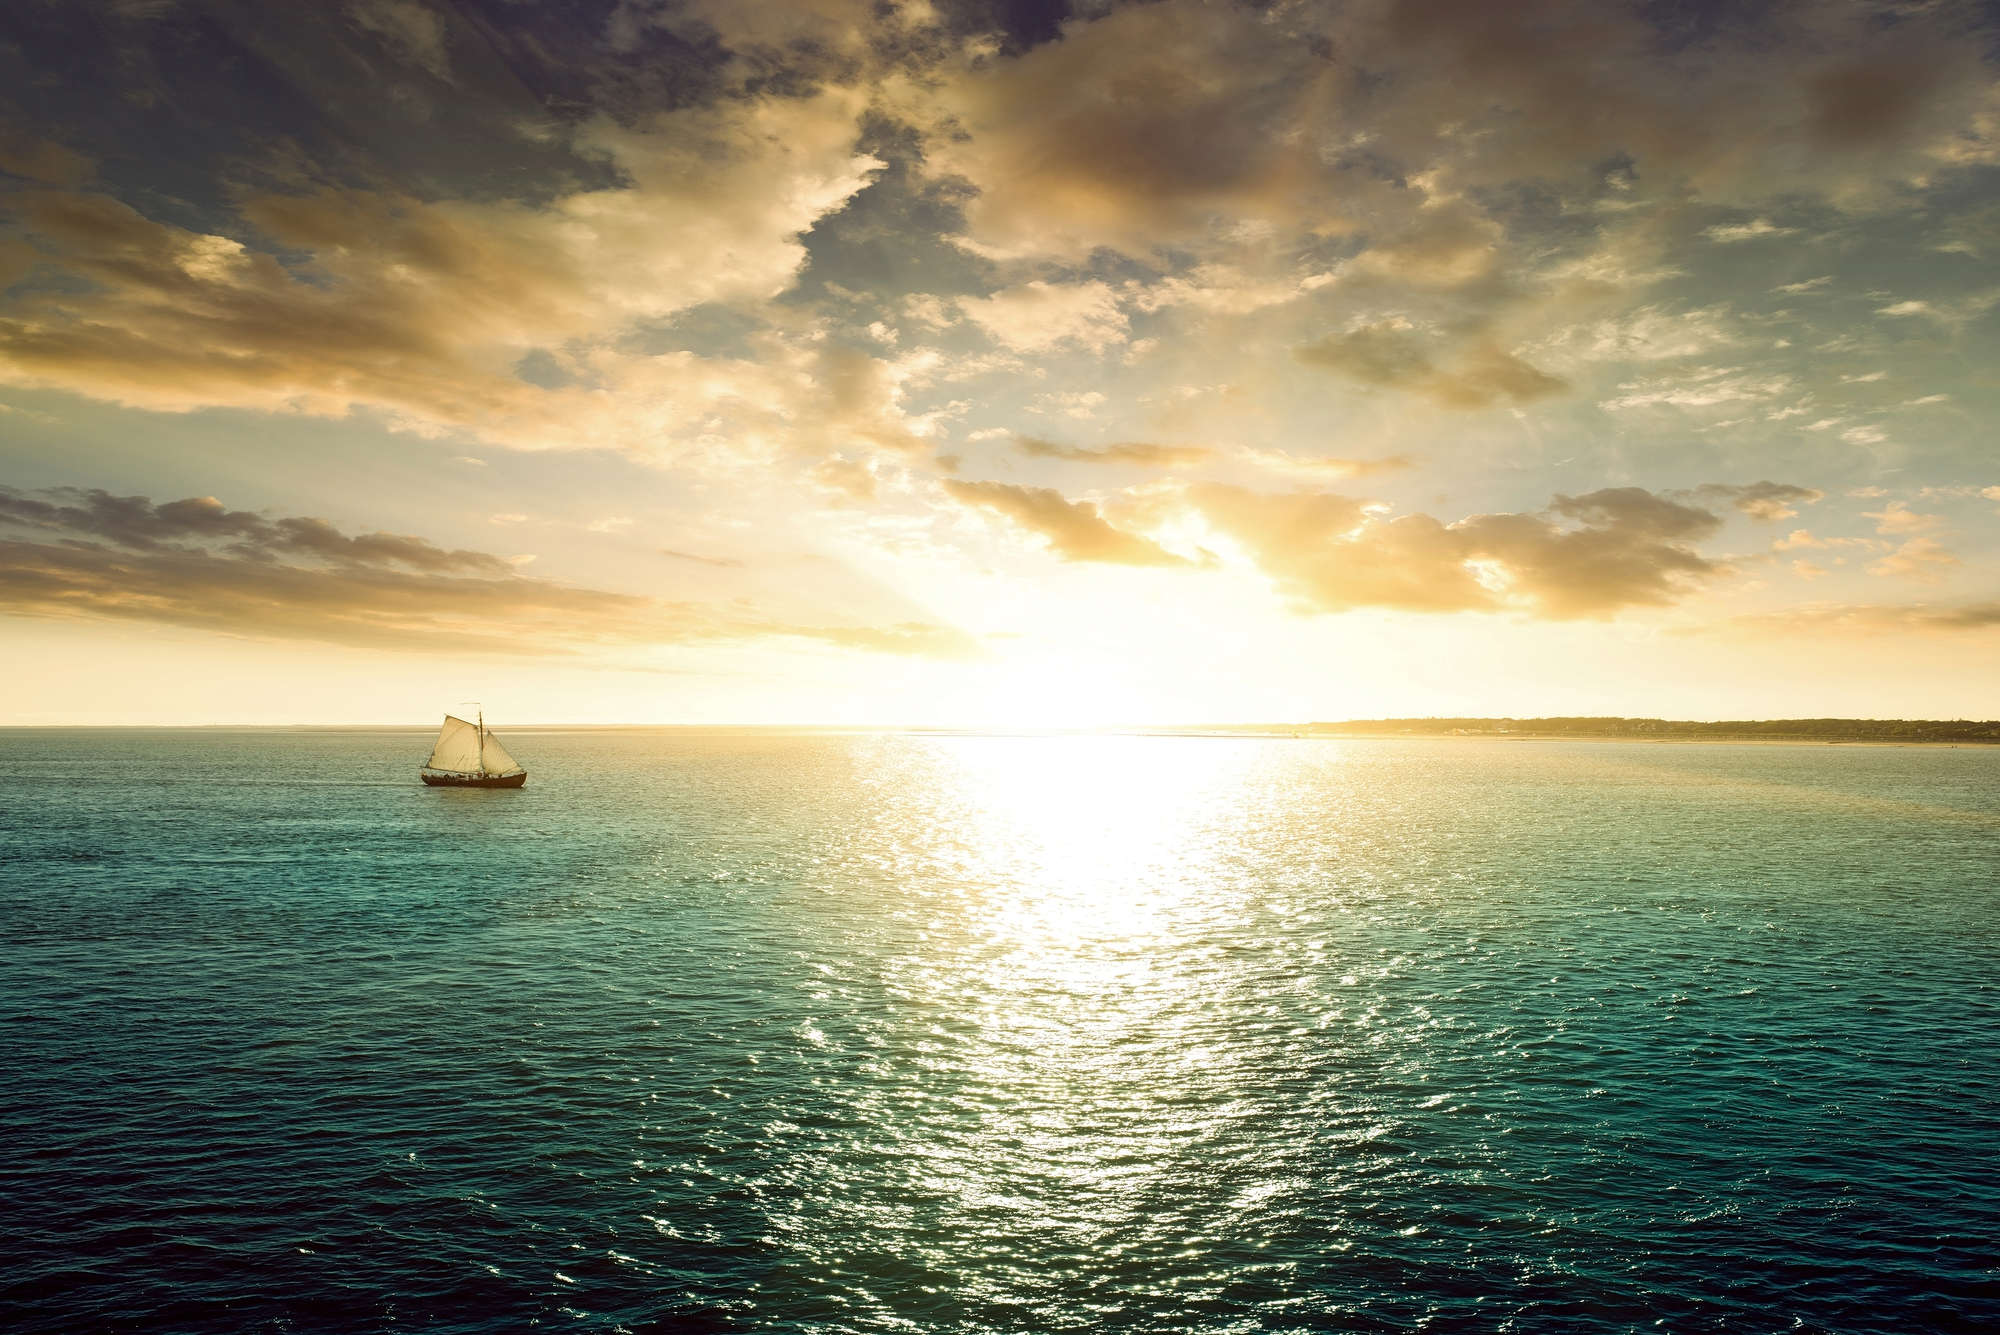             Meer Fototapete Segelboot bei Sonnenuntergang auf Premium Glattvlies
        